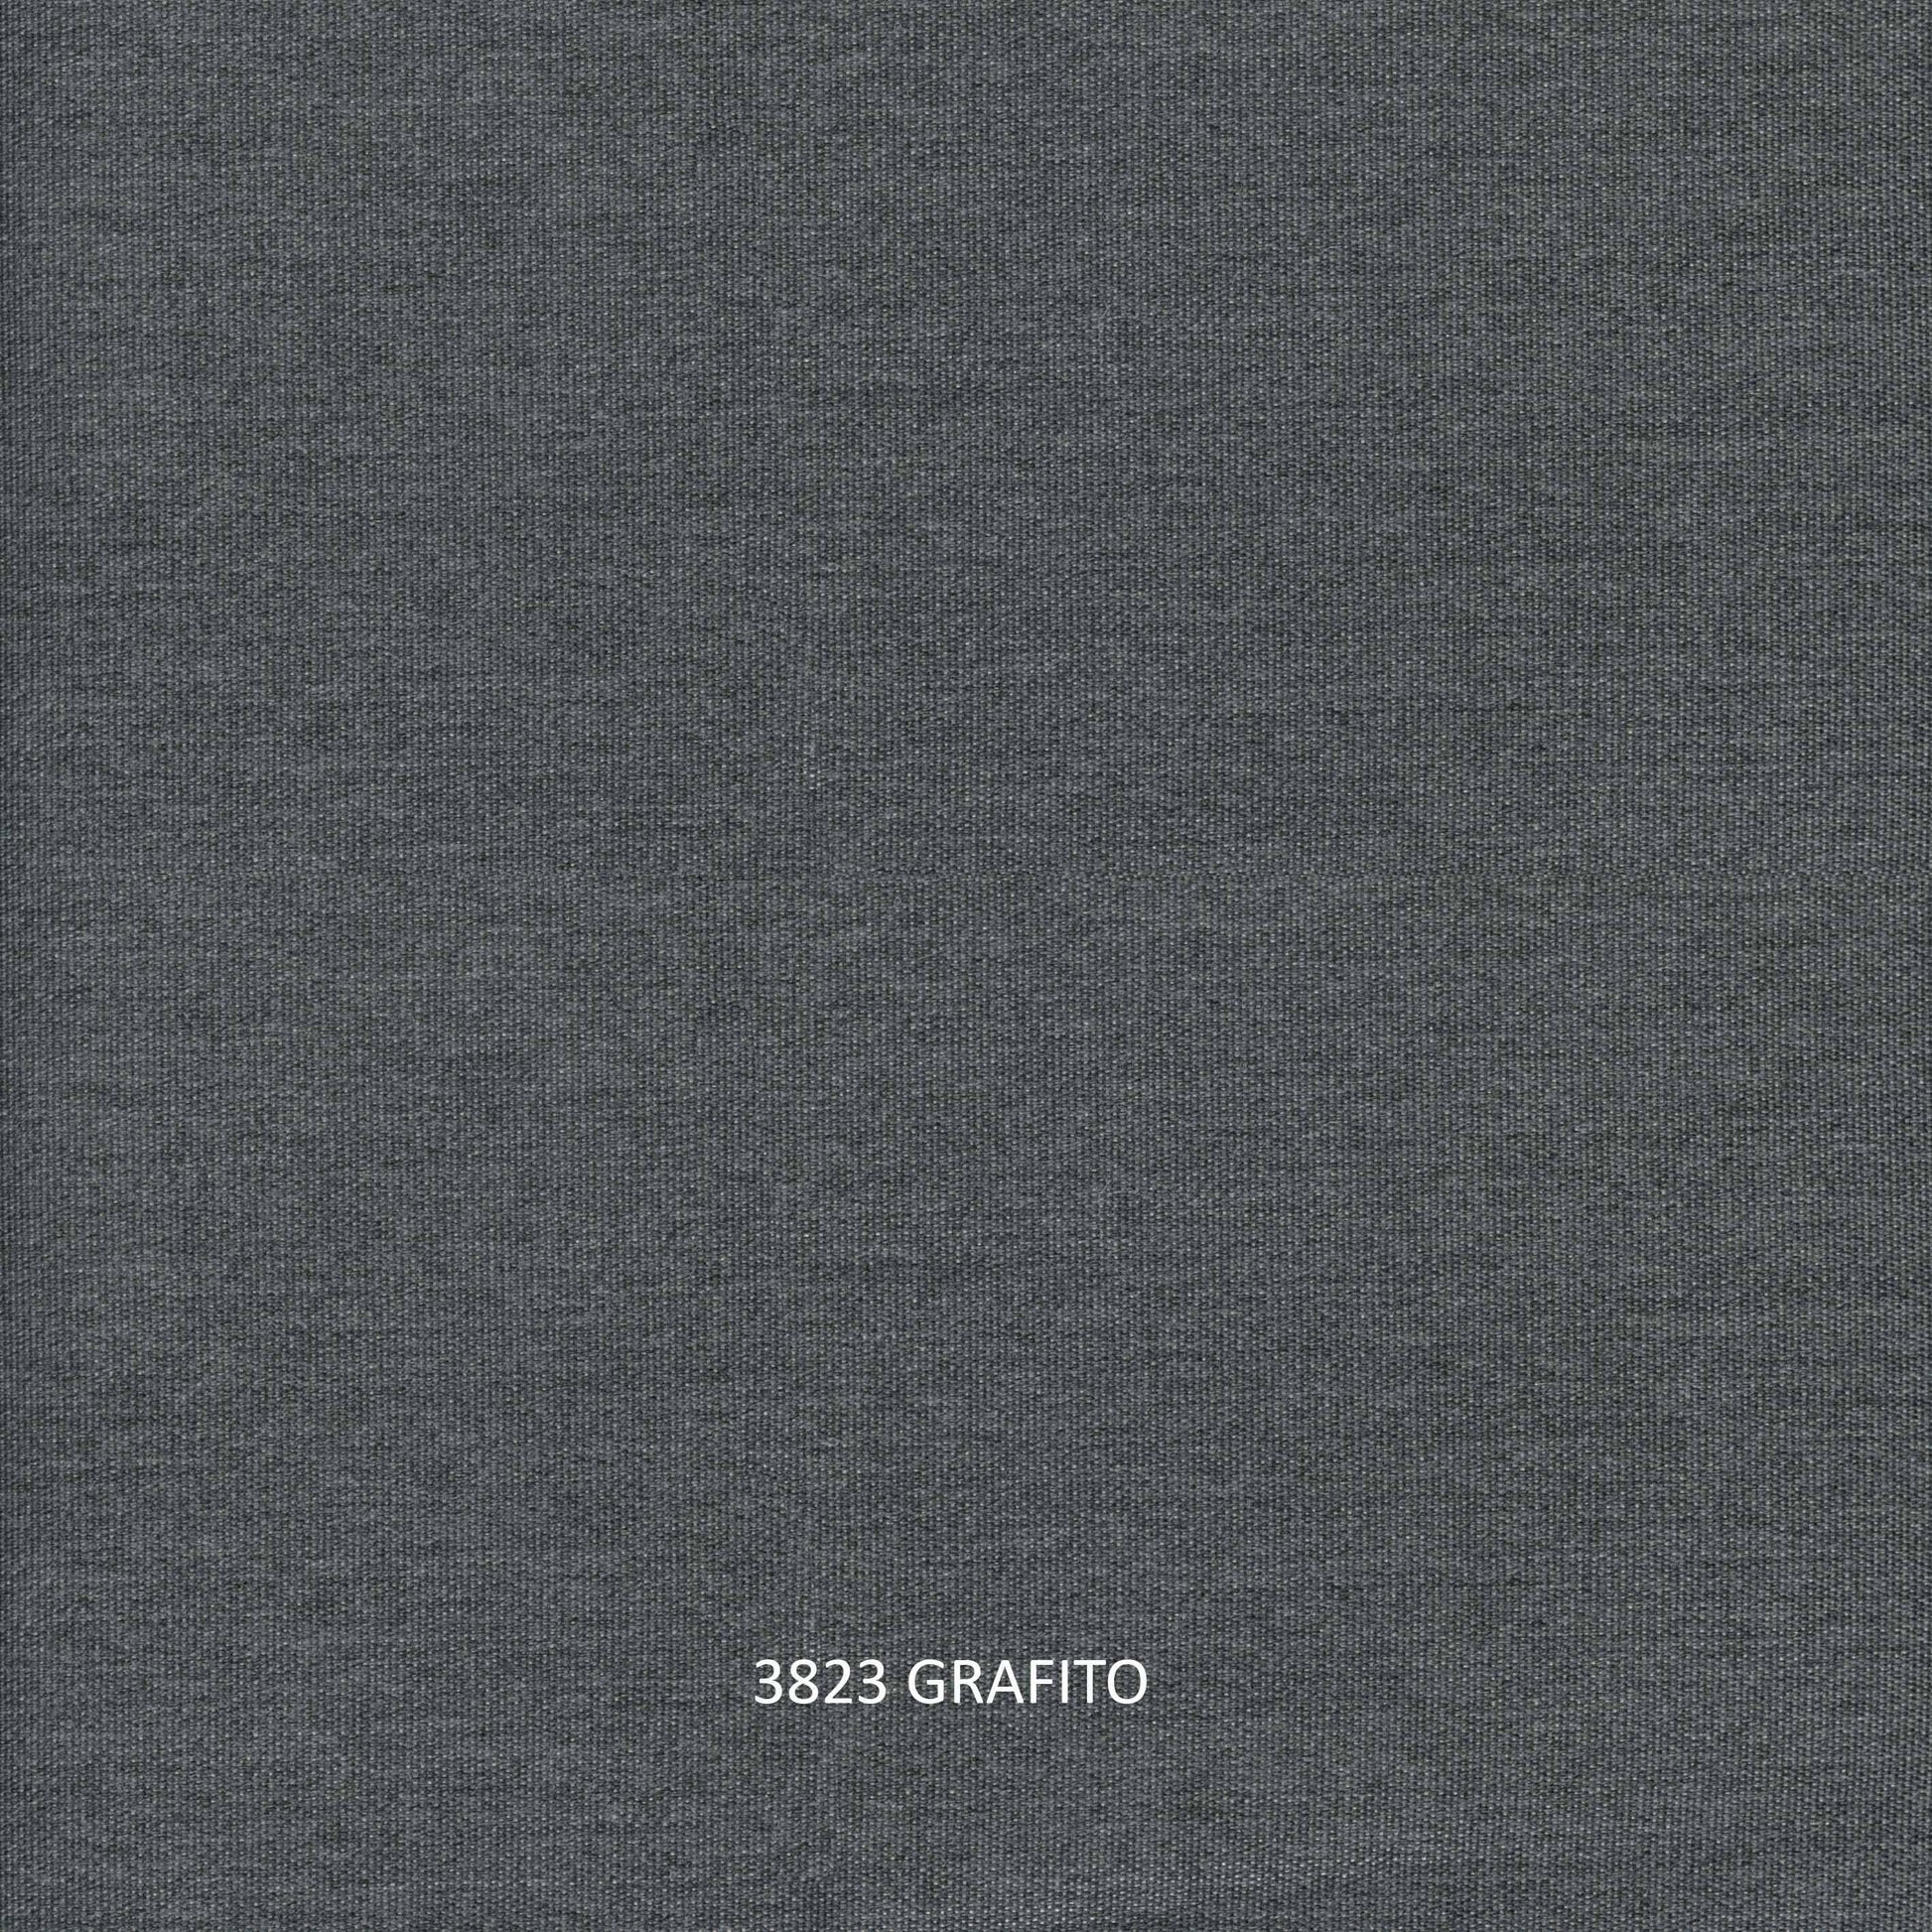 Brando Sea Shell Sofa - PadioLiving - Brando Sea Shell Sofa - Outdoor Sofa - Silver Walnut 30mm Weave-Grafito(£2886) - PadioLiving